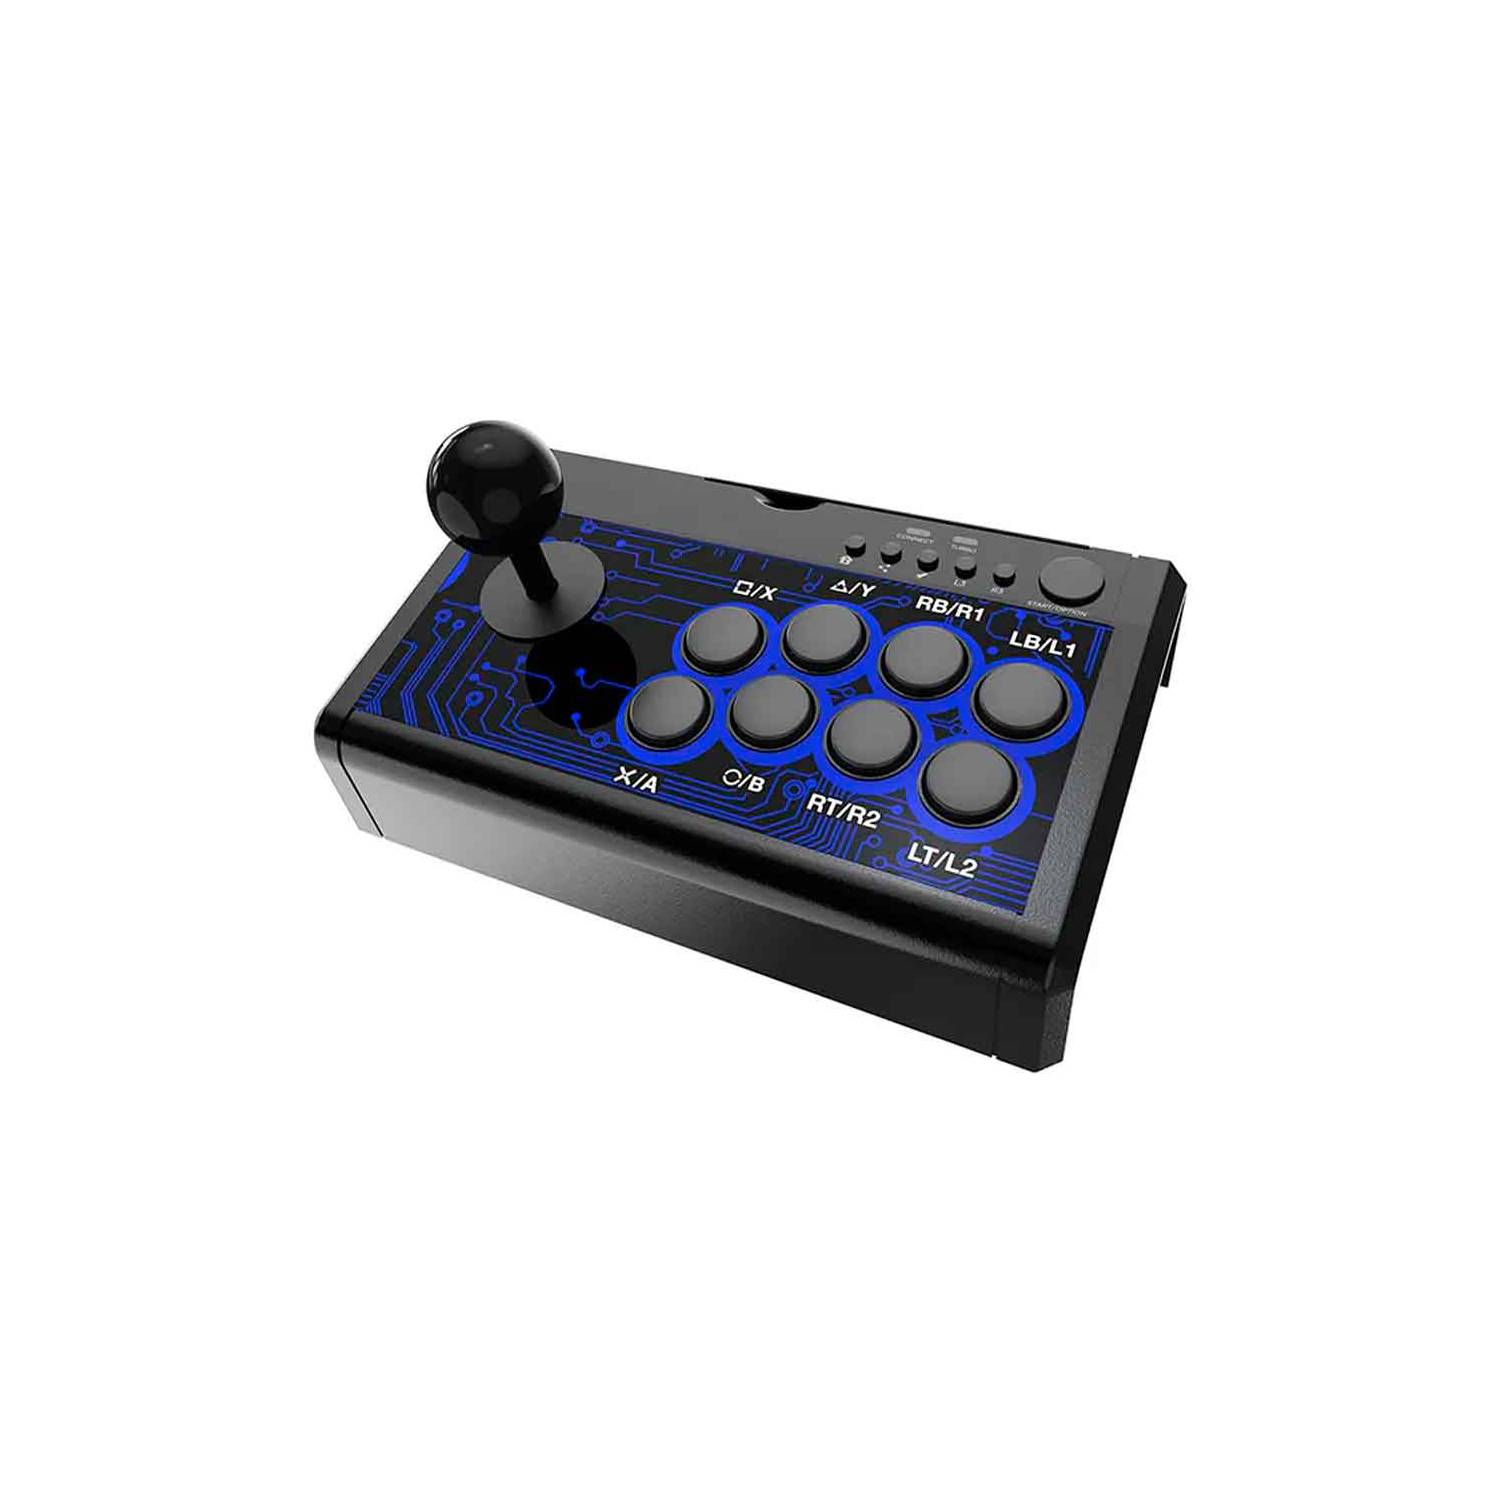 MANDOS ARCADE - Comprar Mando Arcade Joystick: Para Playstation